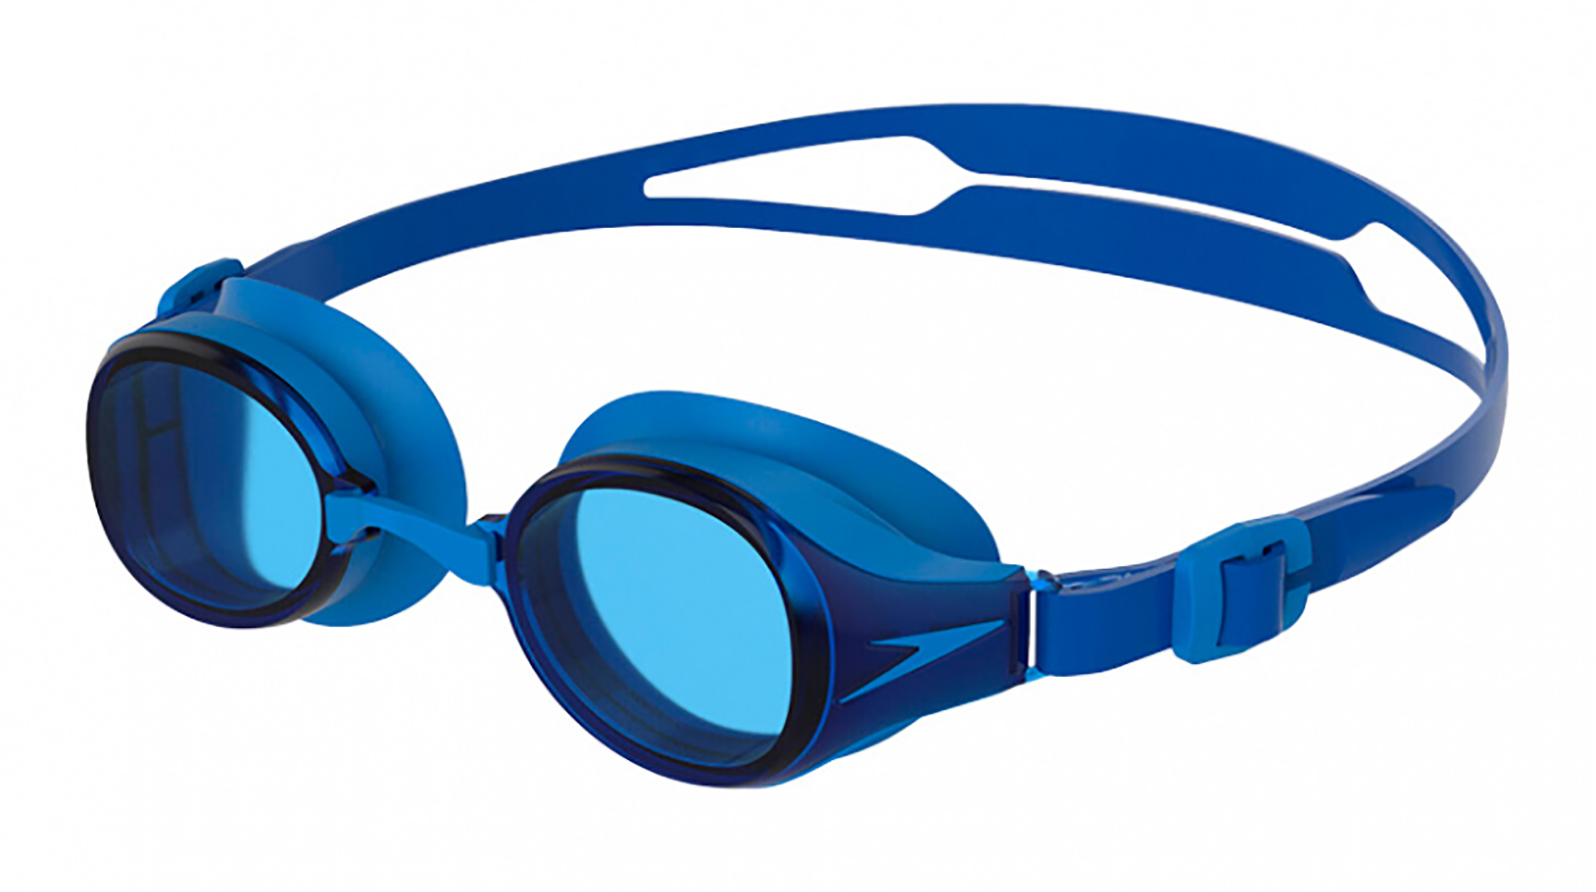 Speedo Очки для плавания Hydropure Optical F809 -5.0 speedo очки для плавания hydropure optical f809 4 0